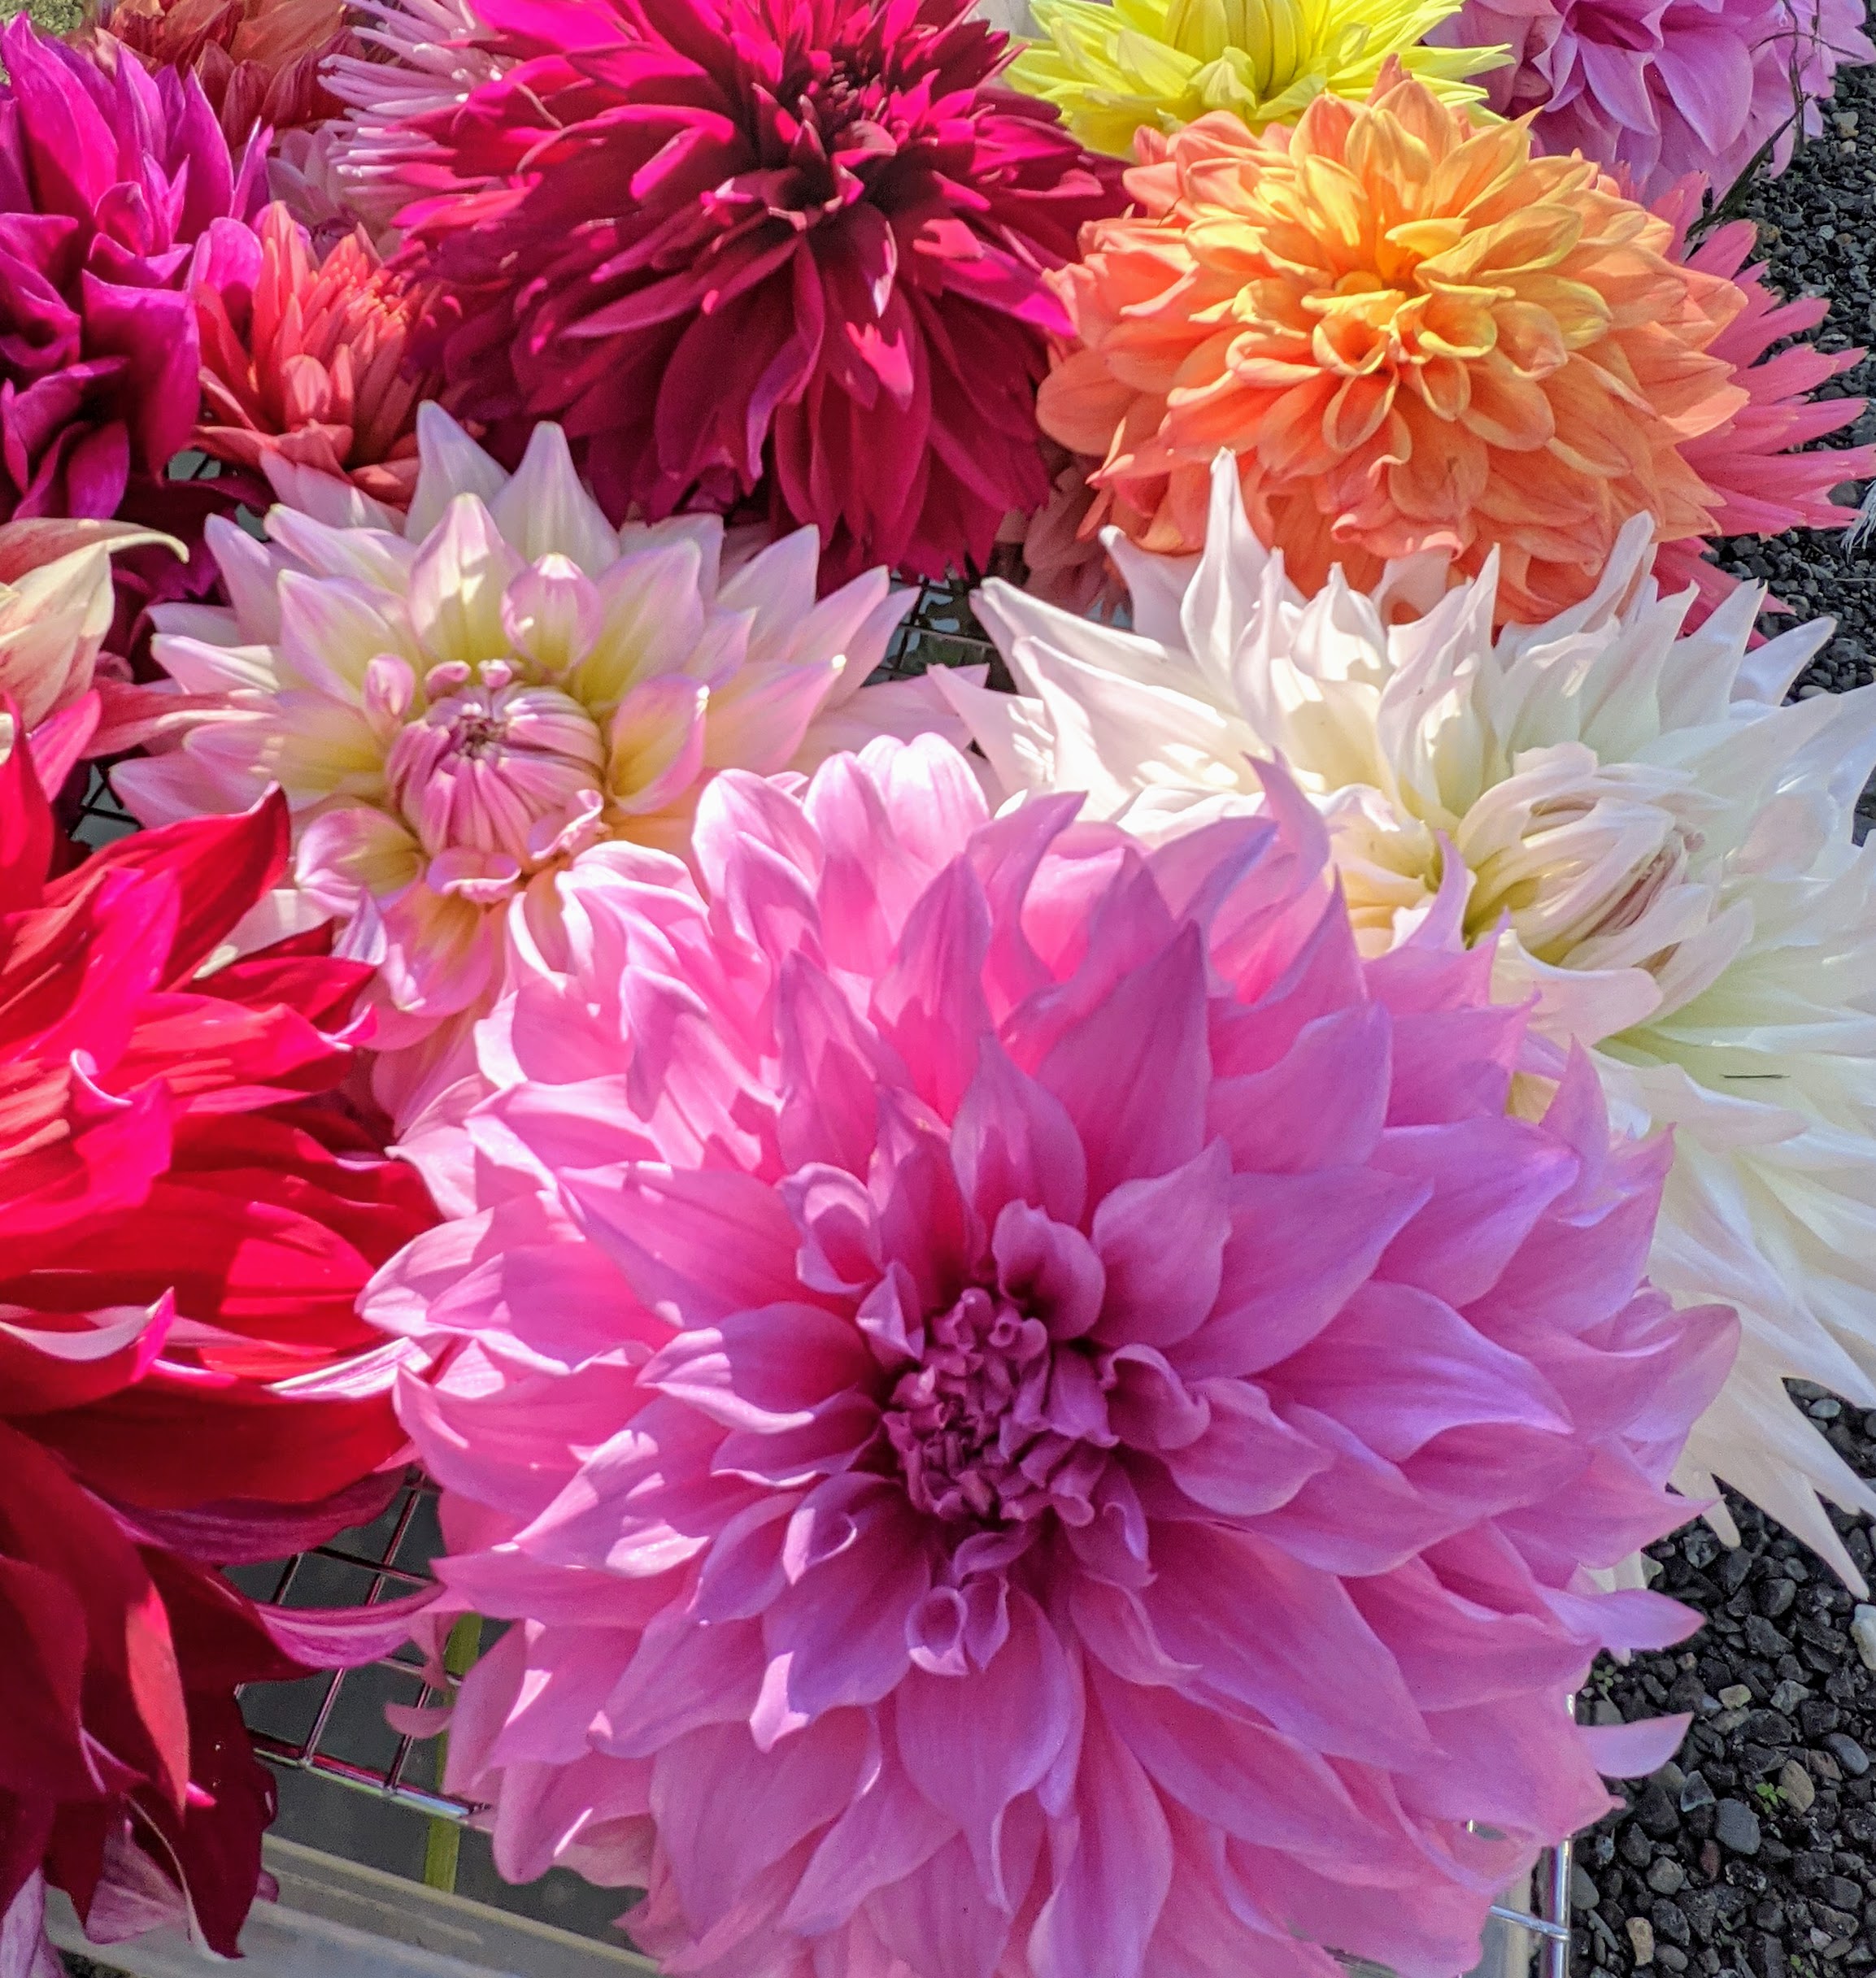 More Beautiful, Colorful Dahlias - The Martha Stewart Blog